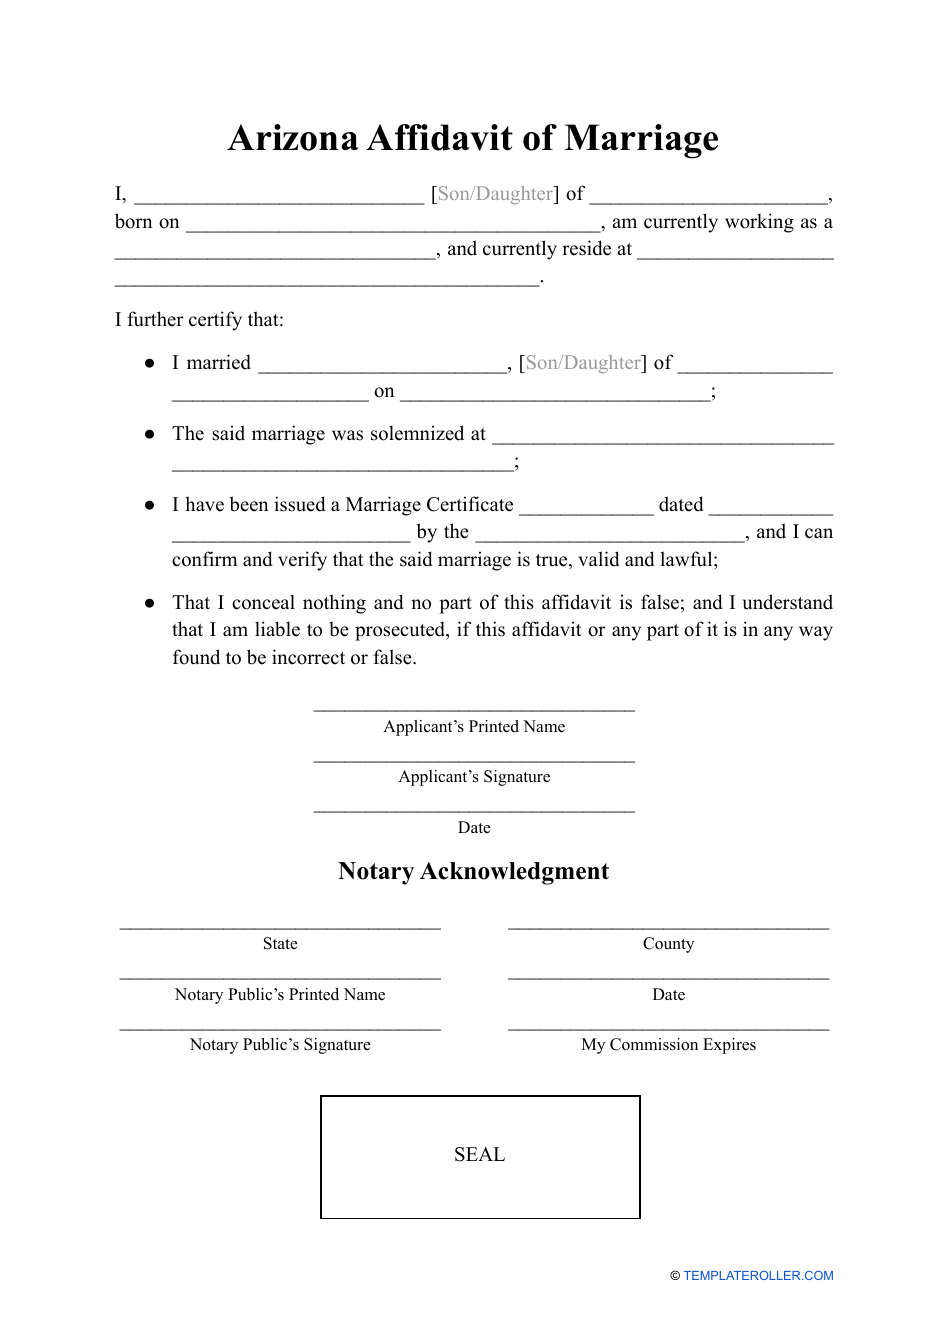 Affidavit of Marriage - Arizona, Page 1